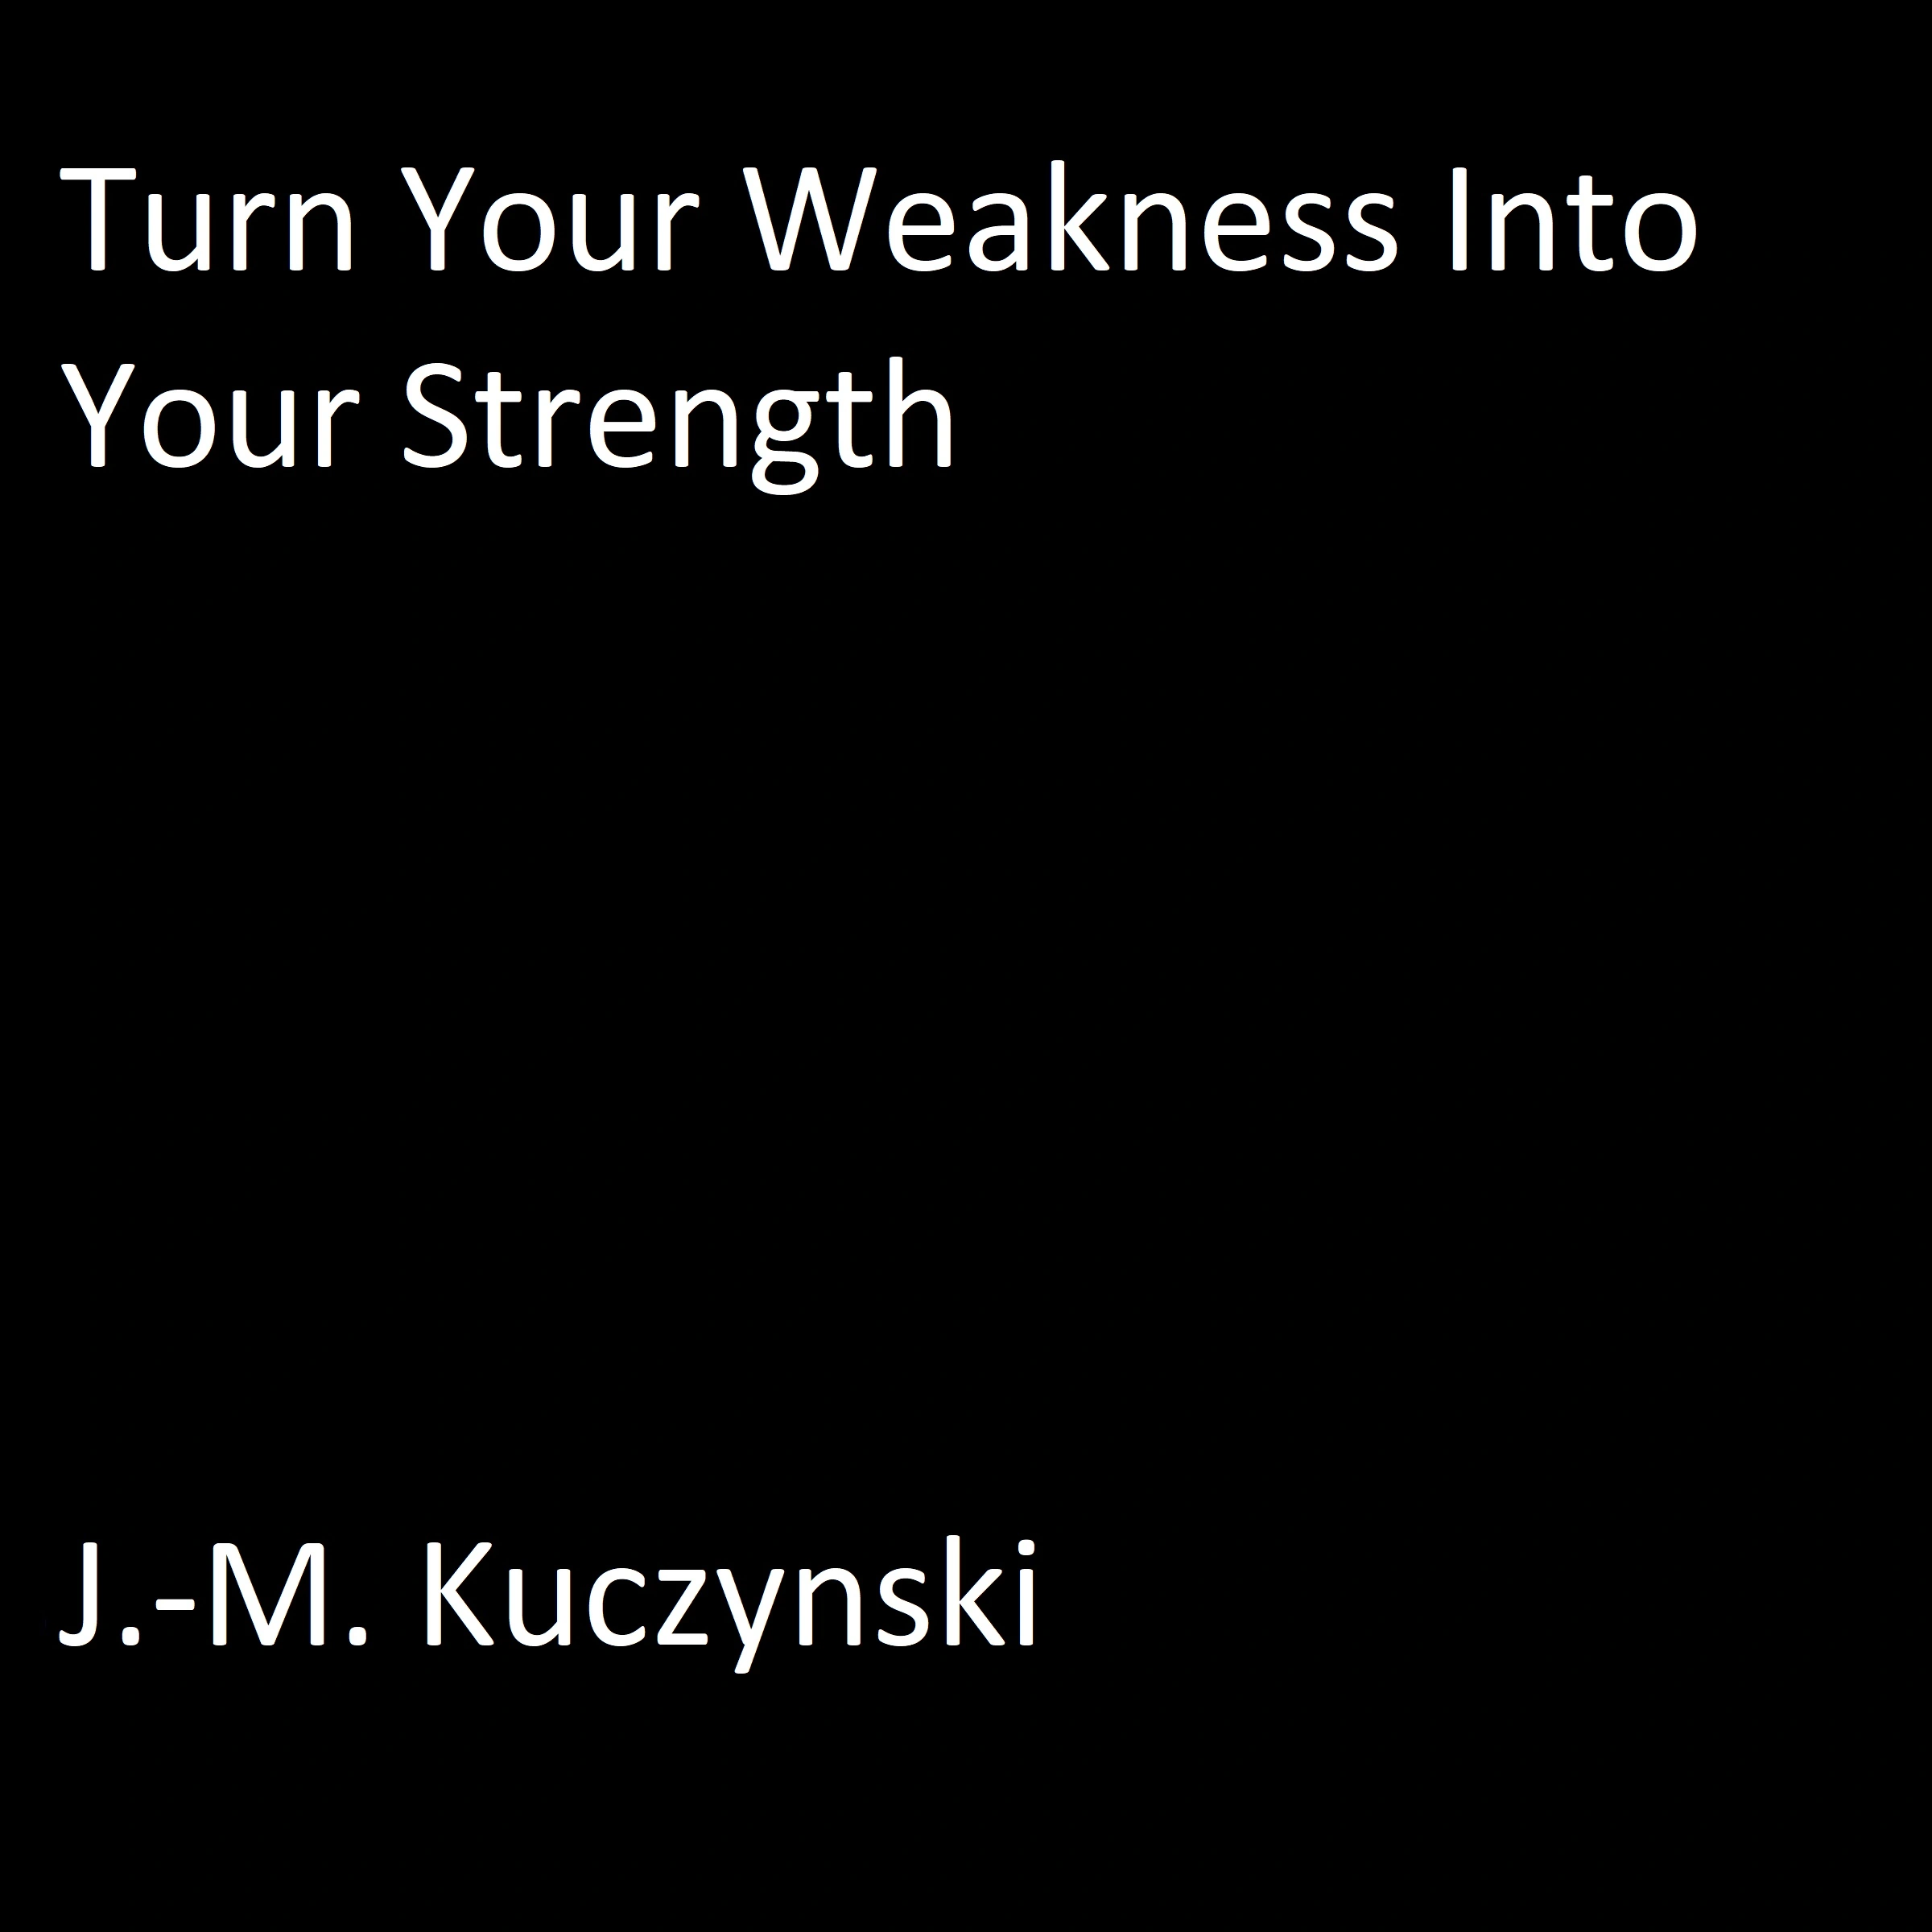 Turn Your Weakness into Your Strength Audiobook by J.-M. Kuczynski